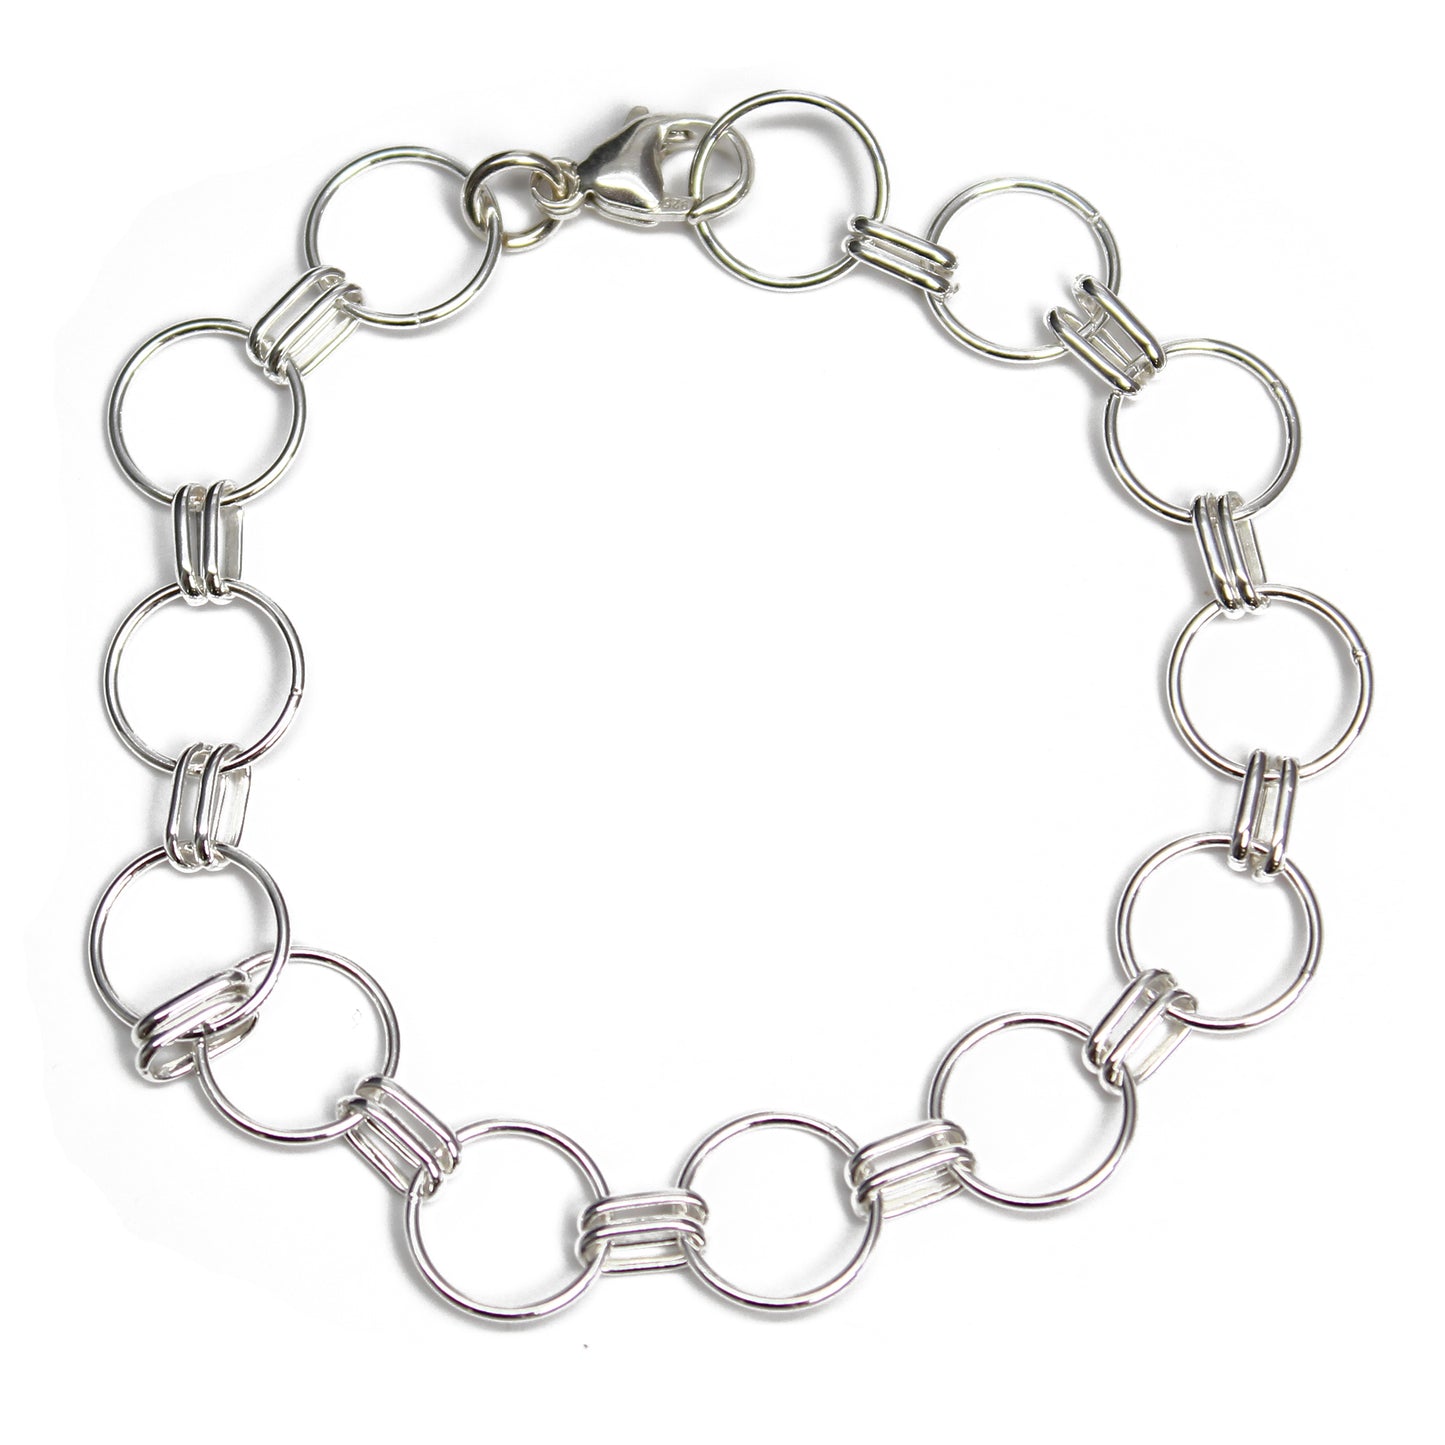 4mm Snap Chain Bracelet, Sterling Silver | Men's Bracelets | Miansai